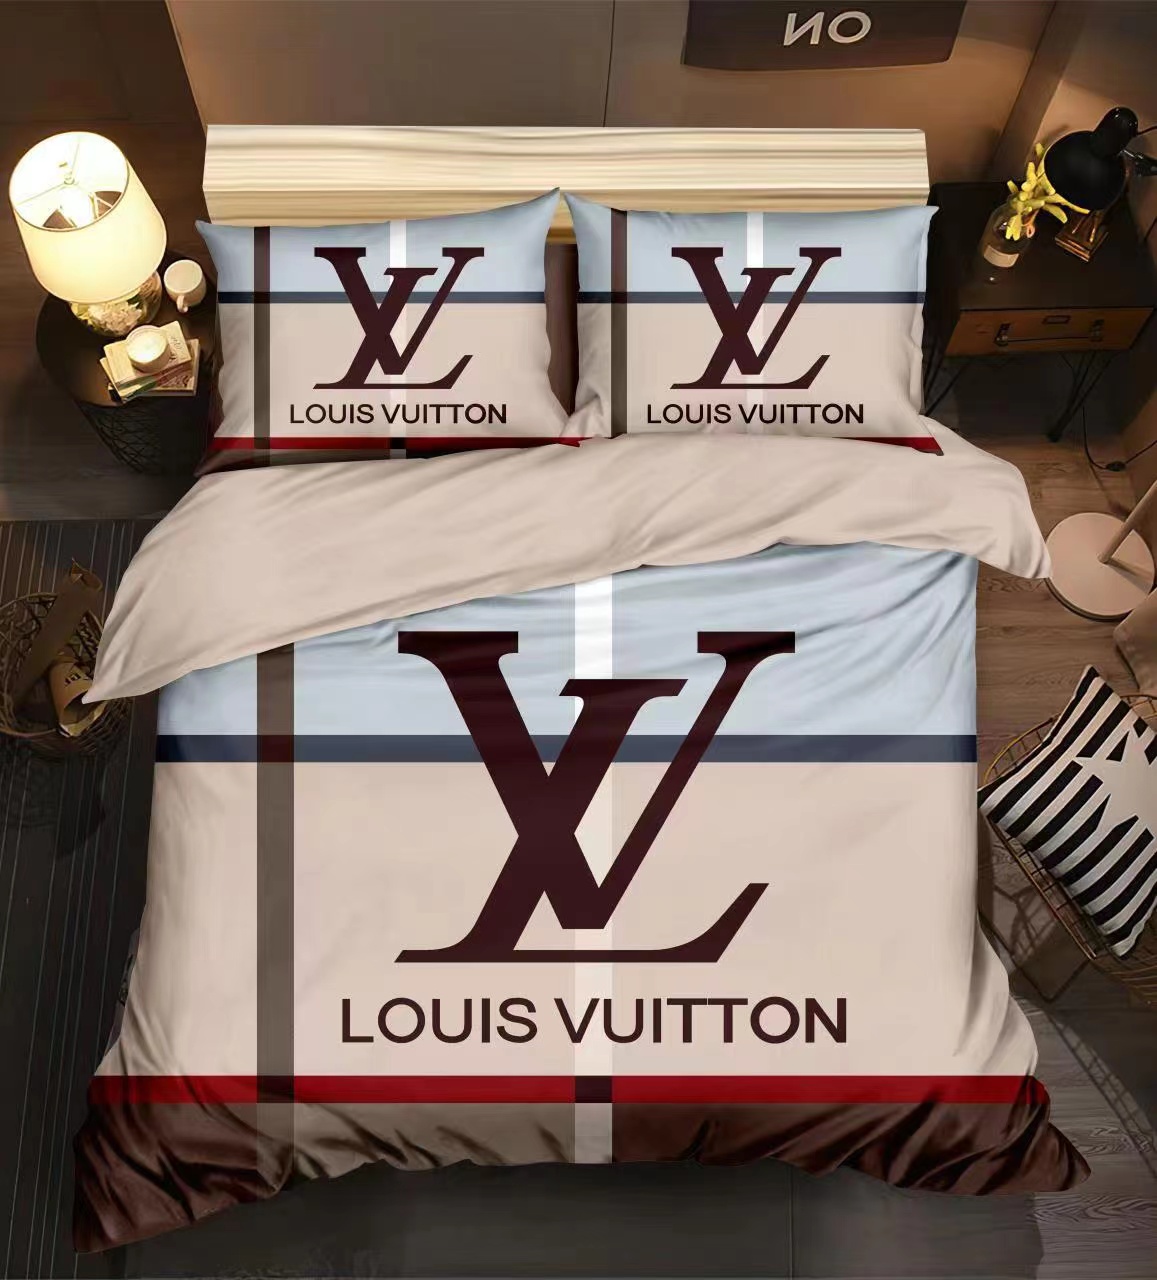 LV13 LOUIS VUITTON CUSTOM BEDDING SET #1 (DUVET COVER & PILLOWCASES)